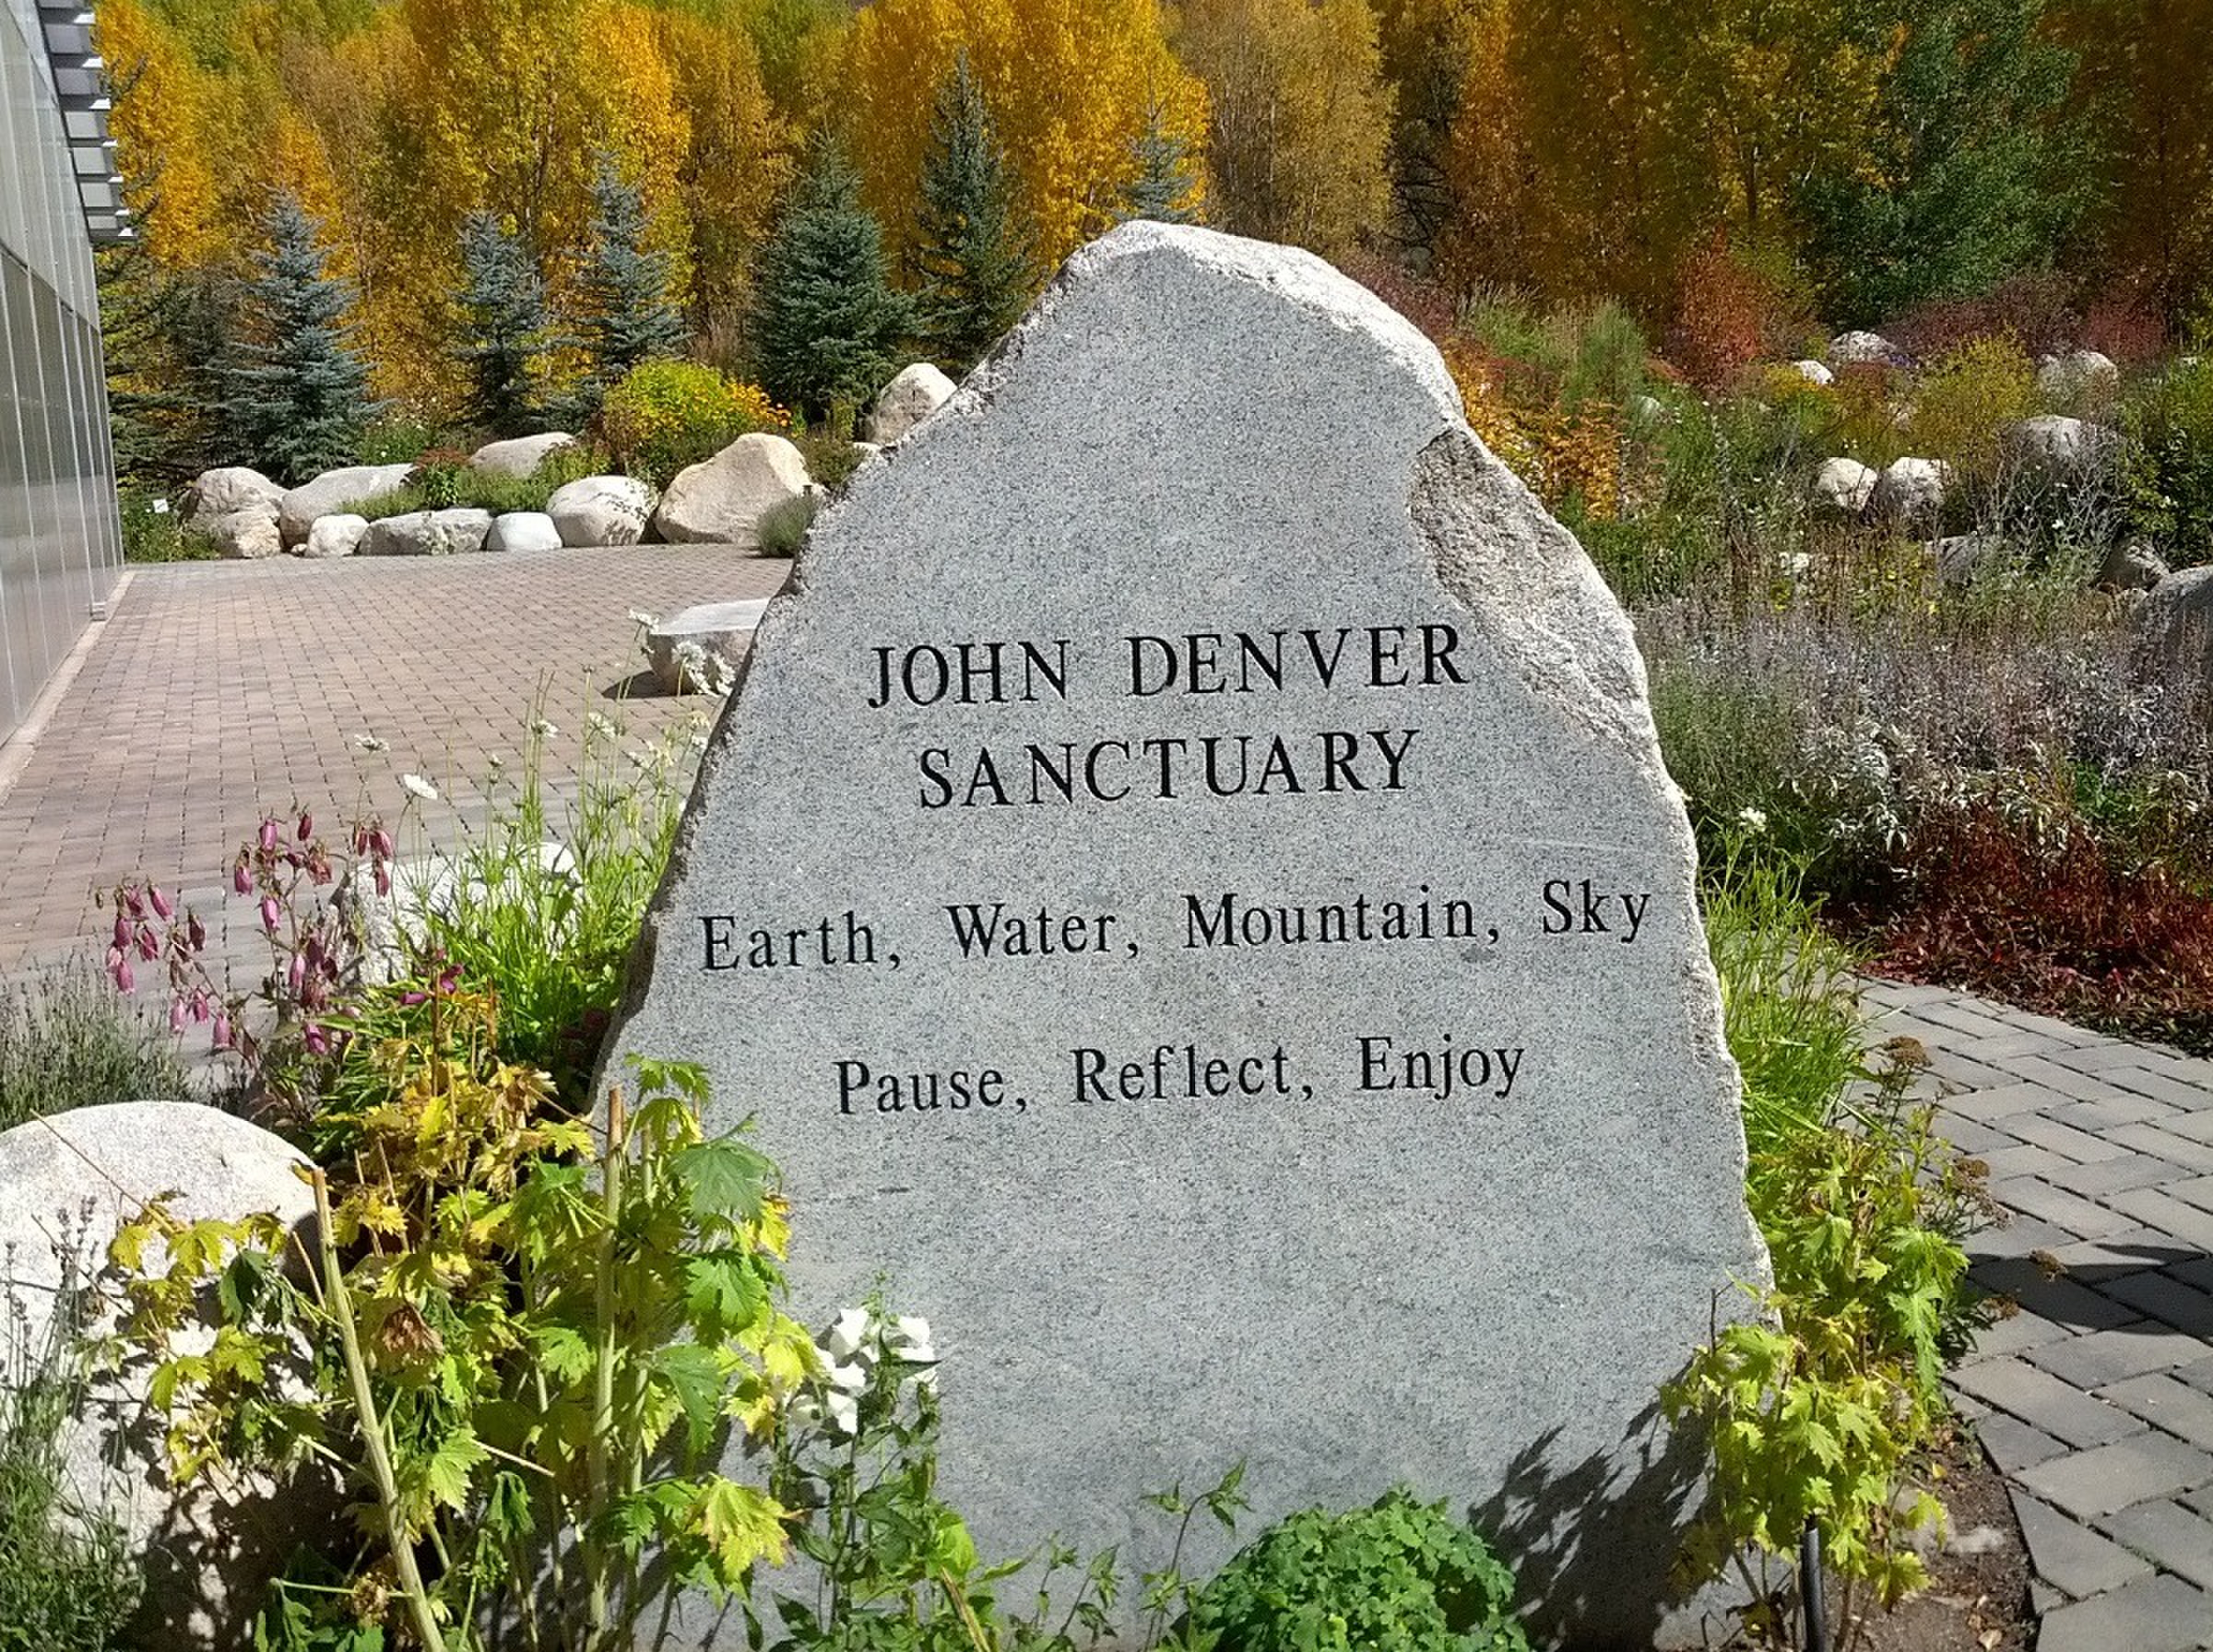 In the John Denver Sanctuary Photo